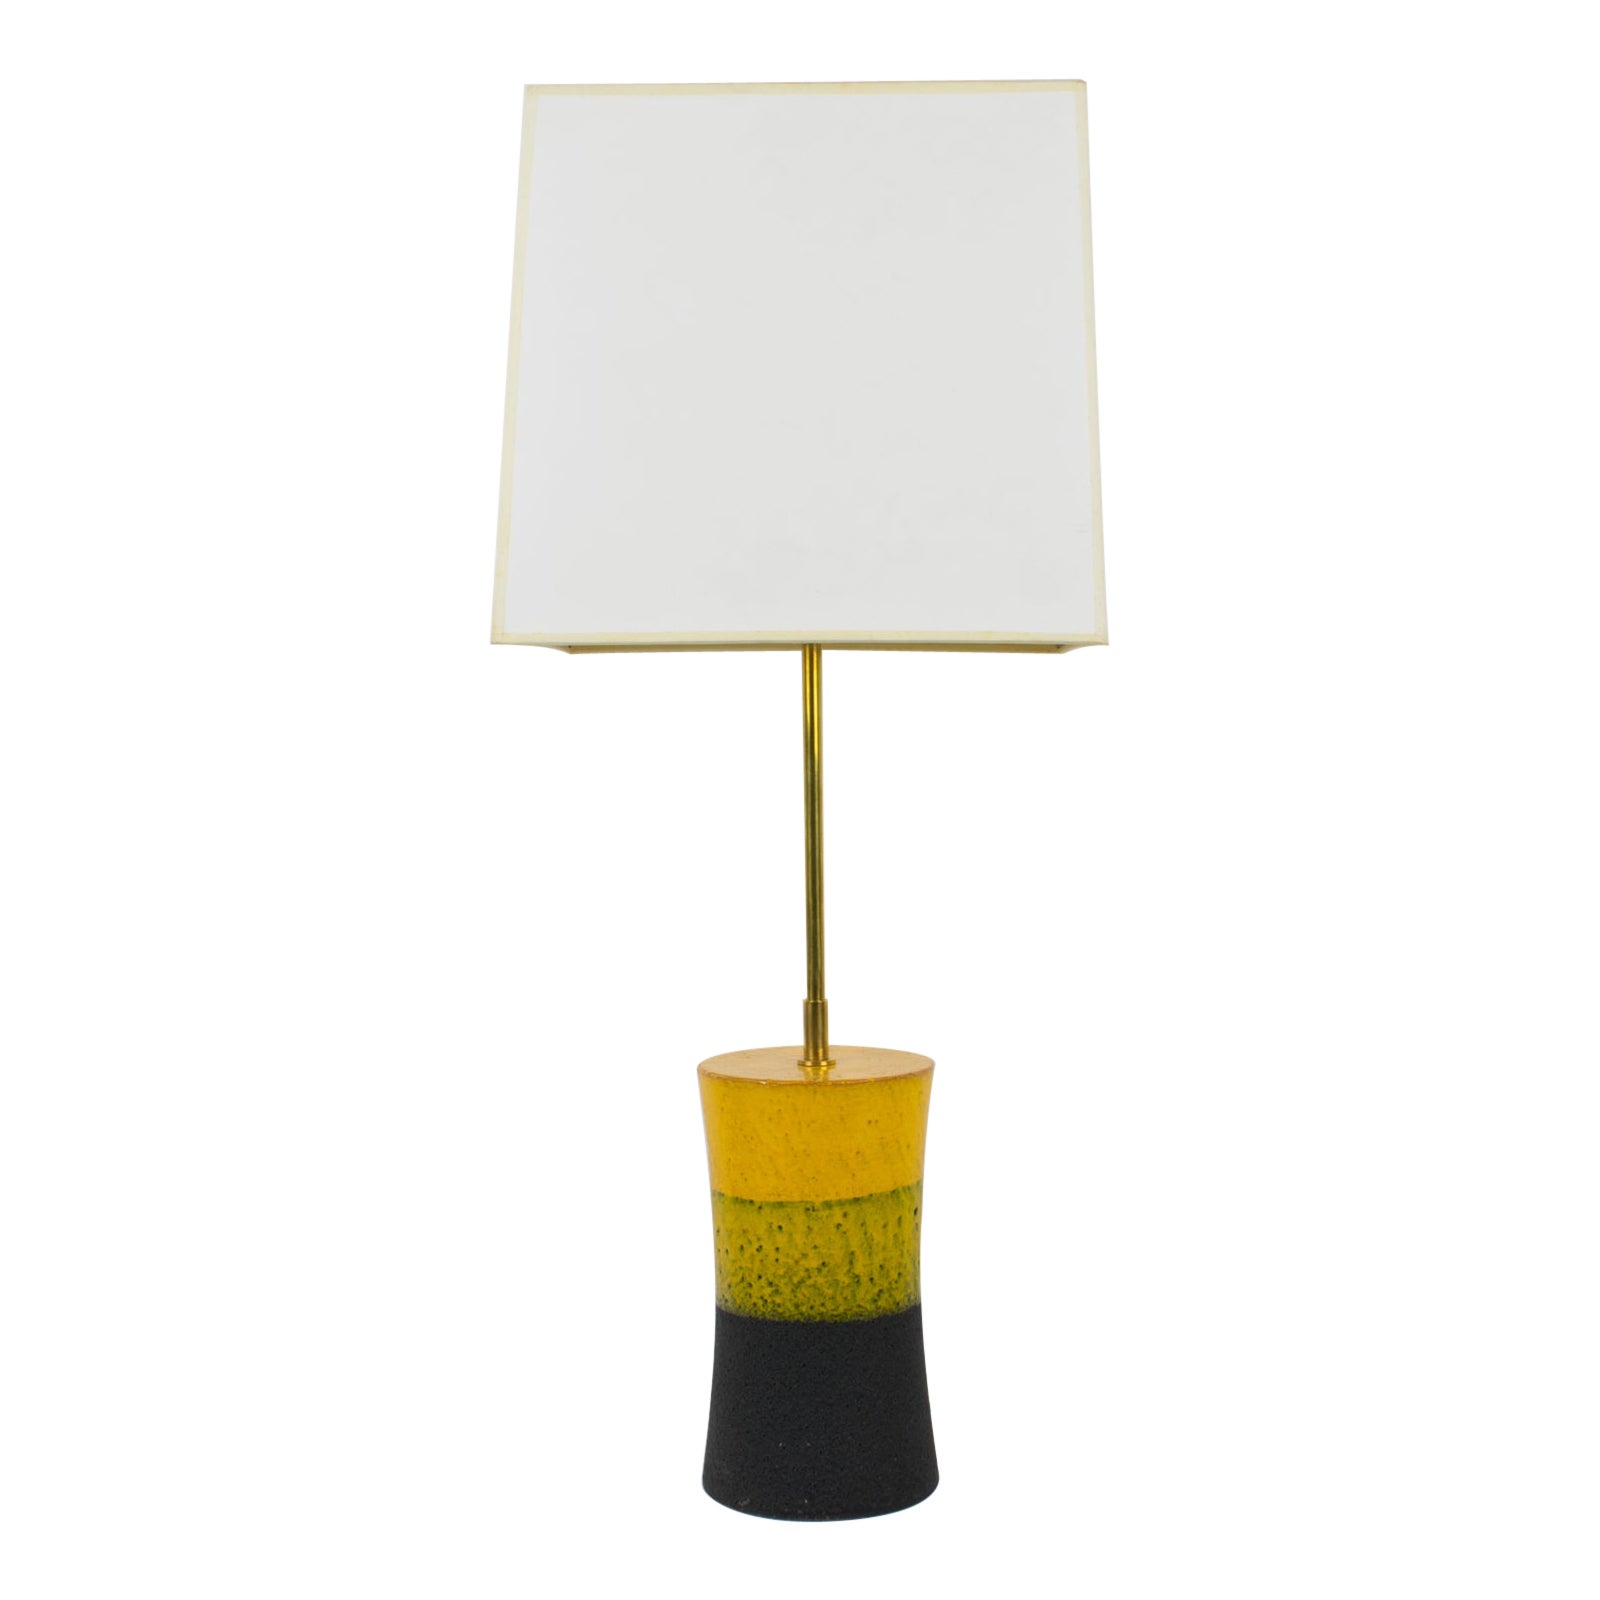 Aldo Londi for Bitossi Italy Mondrian Design Ceramic Table Lamp, 1960s For Sale